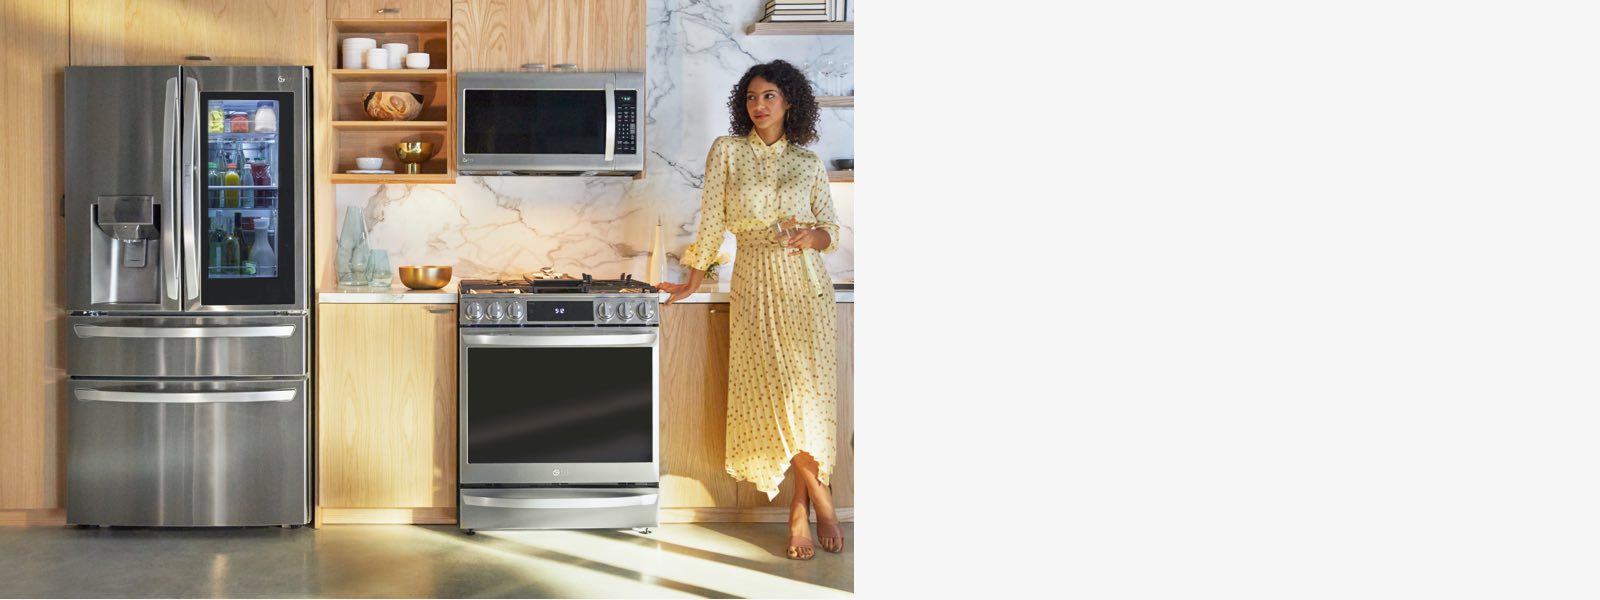 LG Refrigerators: Smart Fridges that Stand Out | LG USA